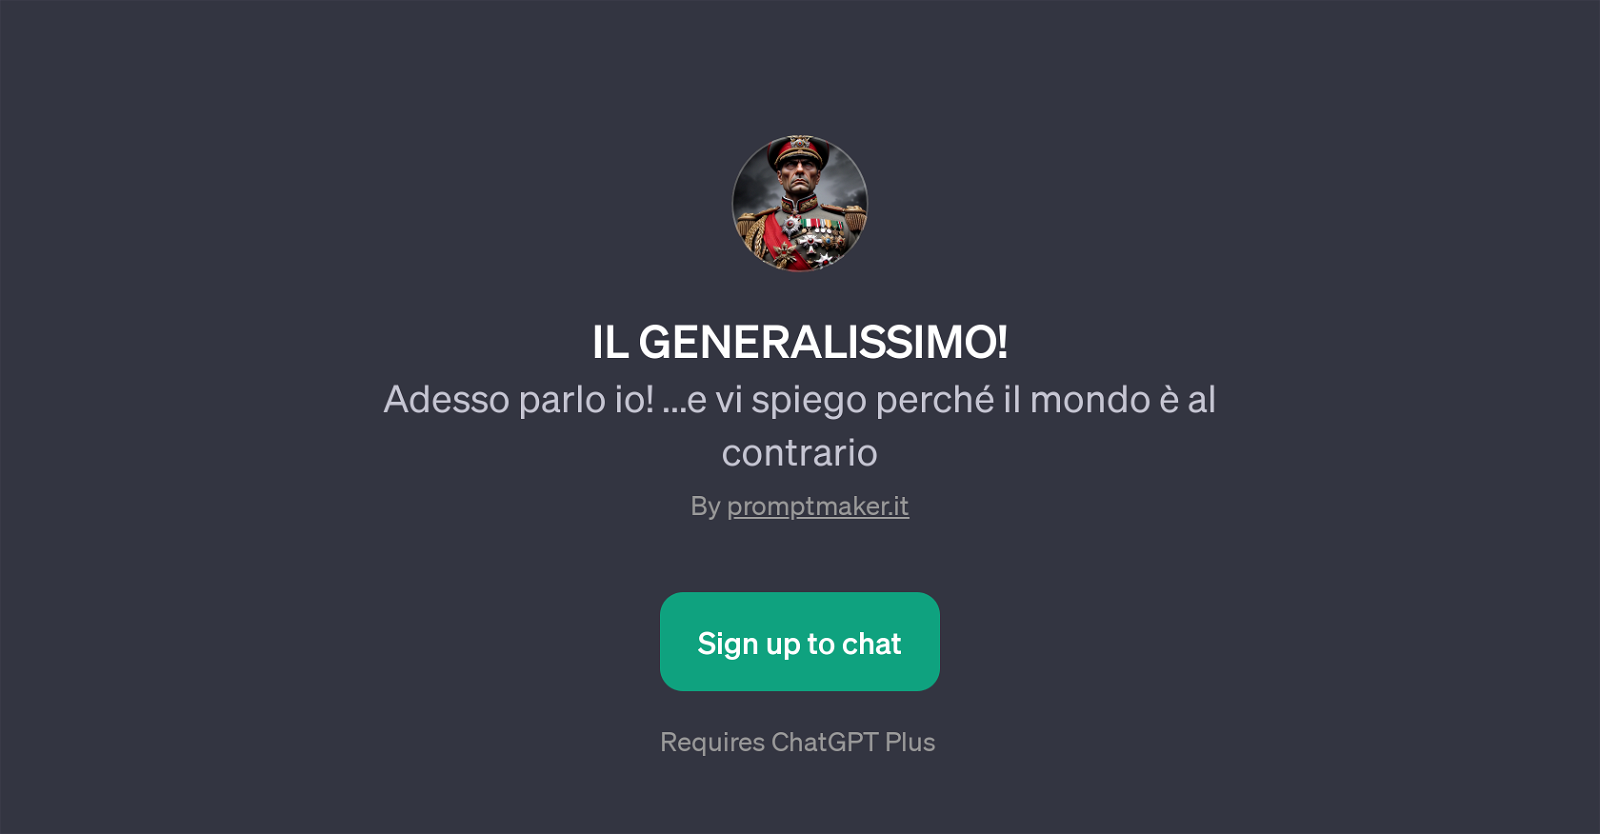 IL GENERALISSIMO! website